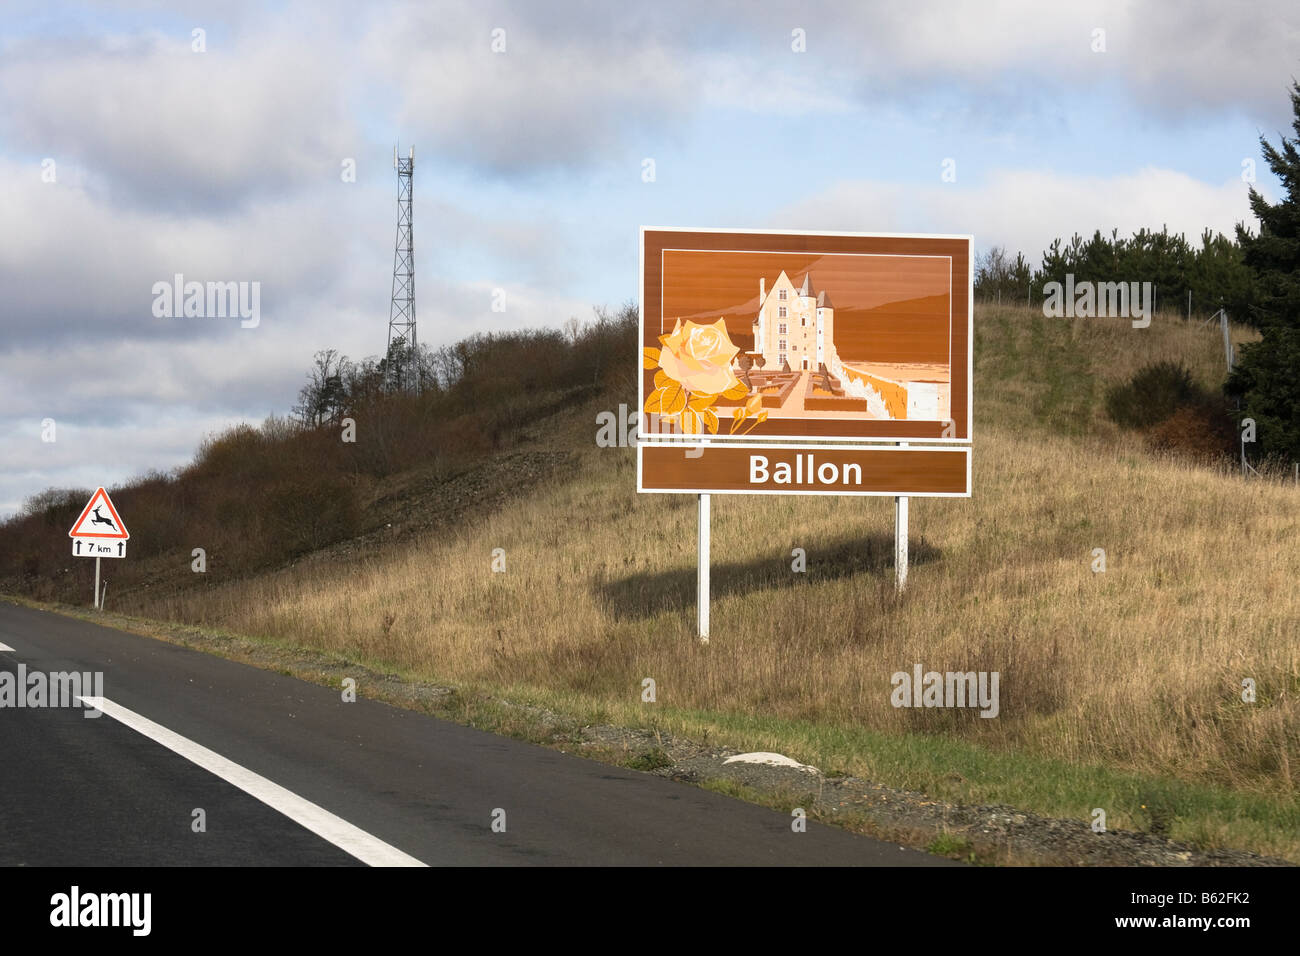 Autoroute signs - Ballon, France Stock Photo